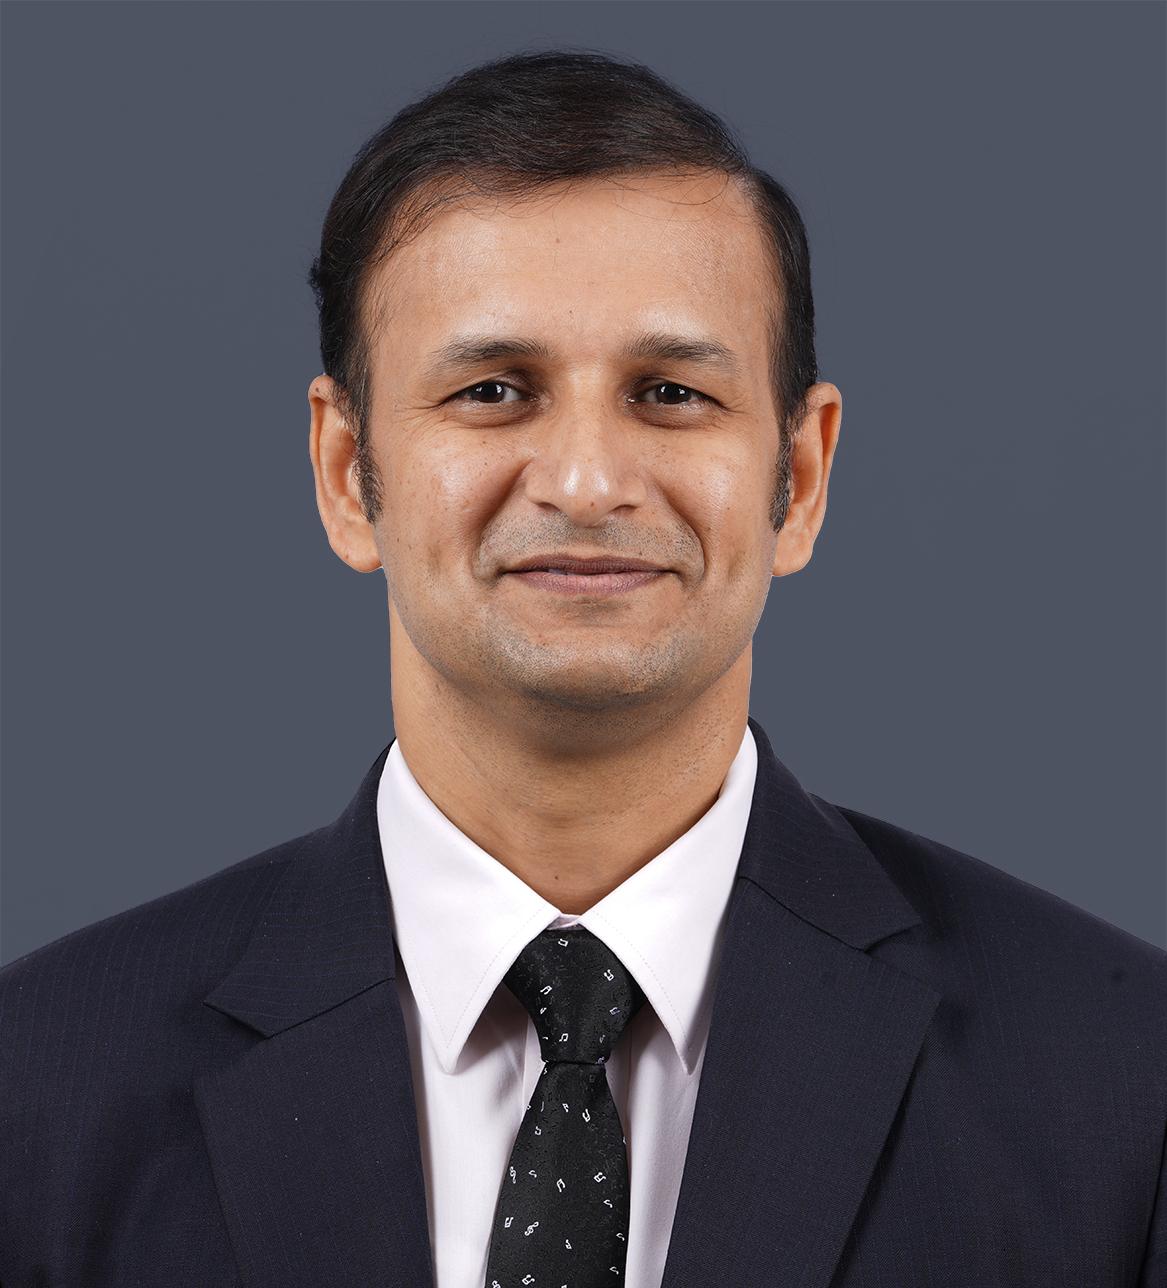 Dr. Anubhav Pandey